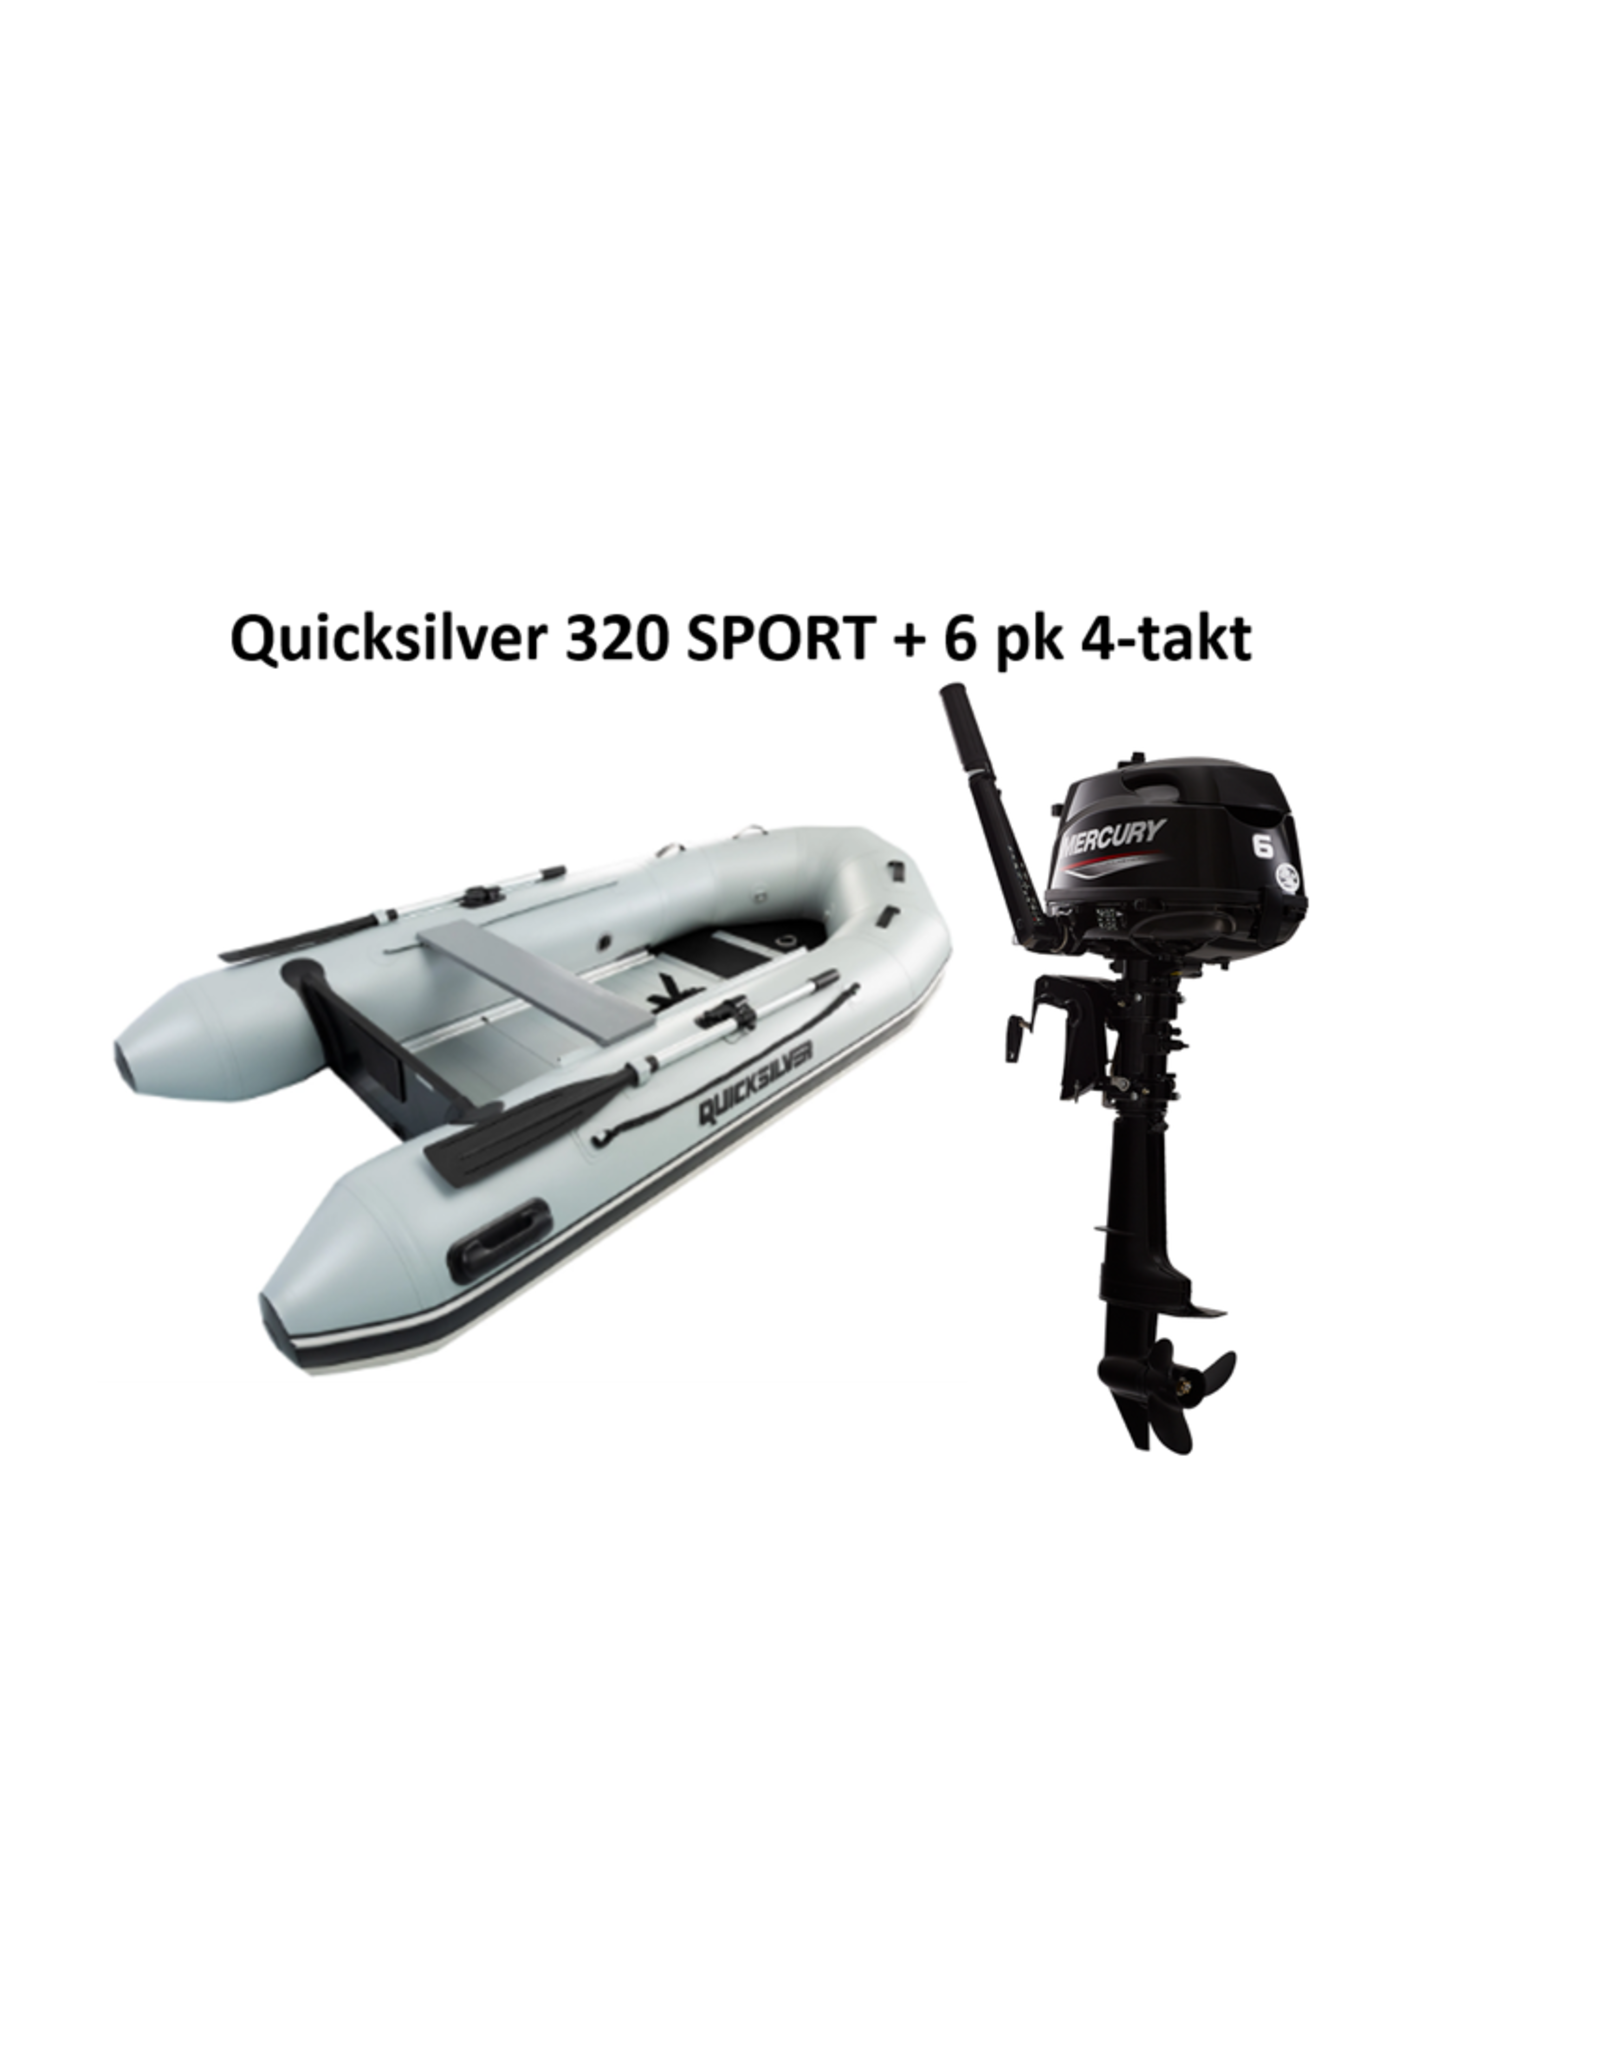 Quicksilver Quicksilver 320 SPORT + Mercury 4/20 pk 4-takt